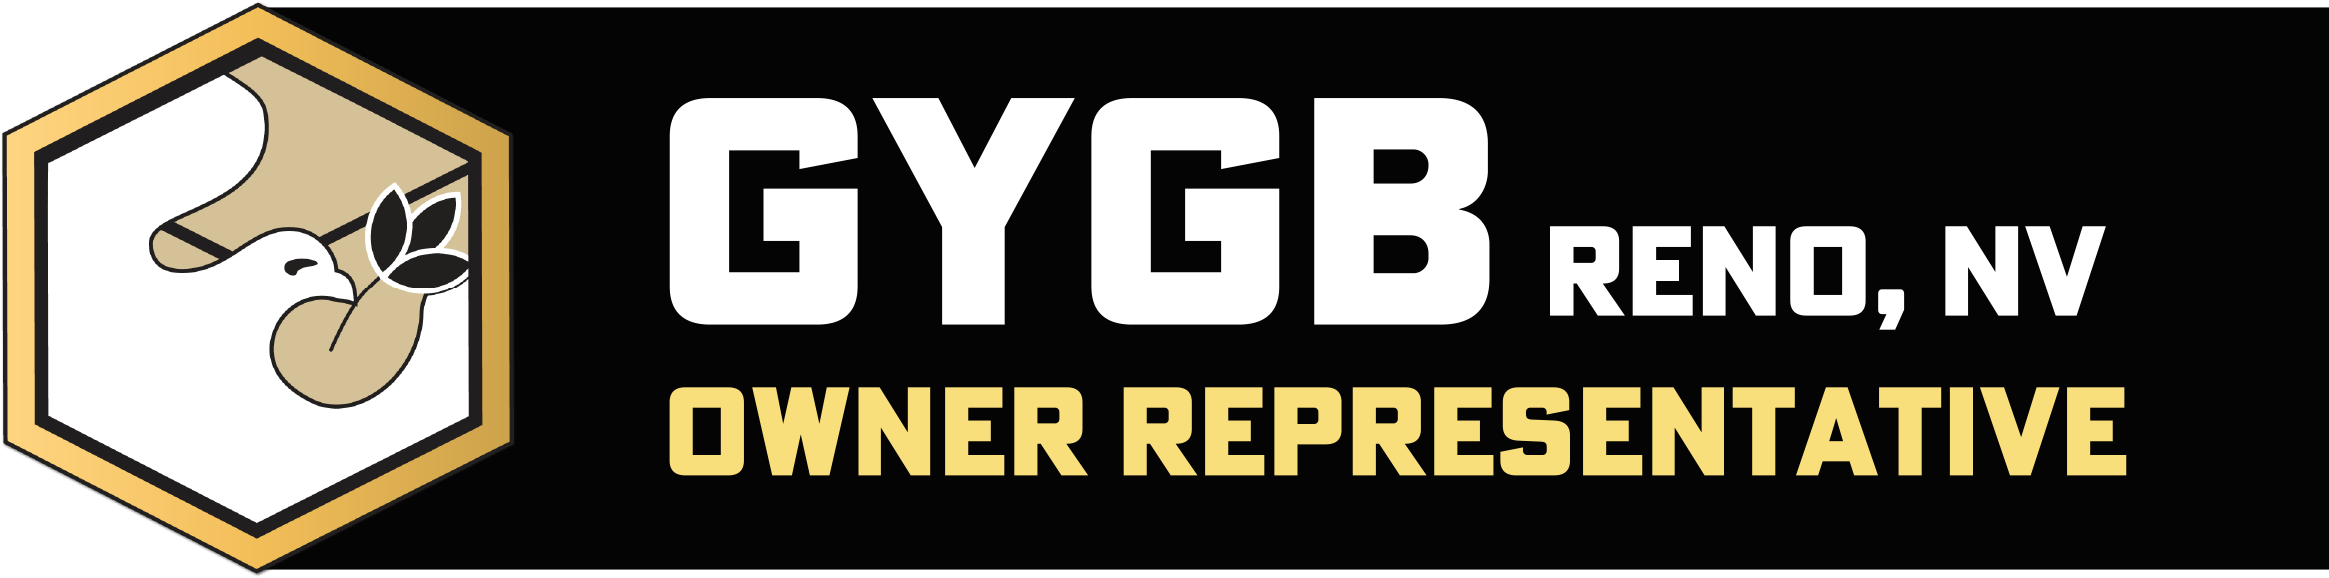 GYGB Reno, NV Owner Representative logo